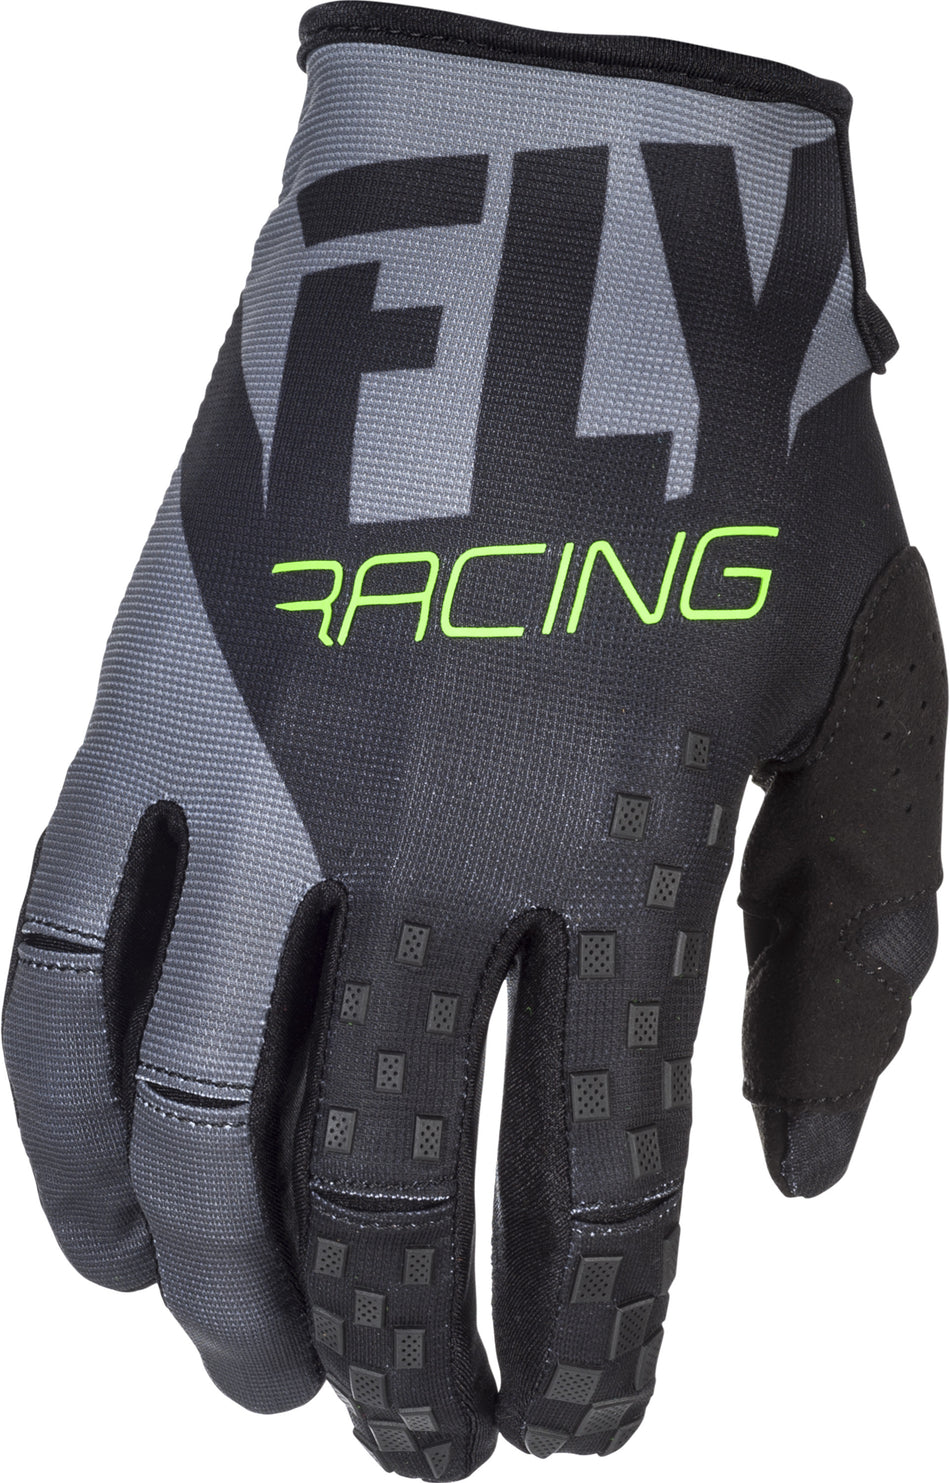 FLY RACING Kinetic Gloves Black/Grey Sz 12 371-41012